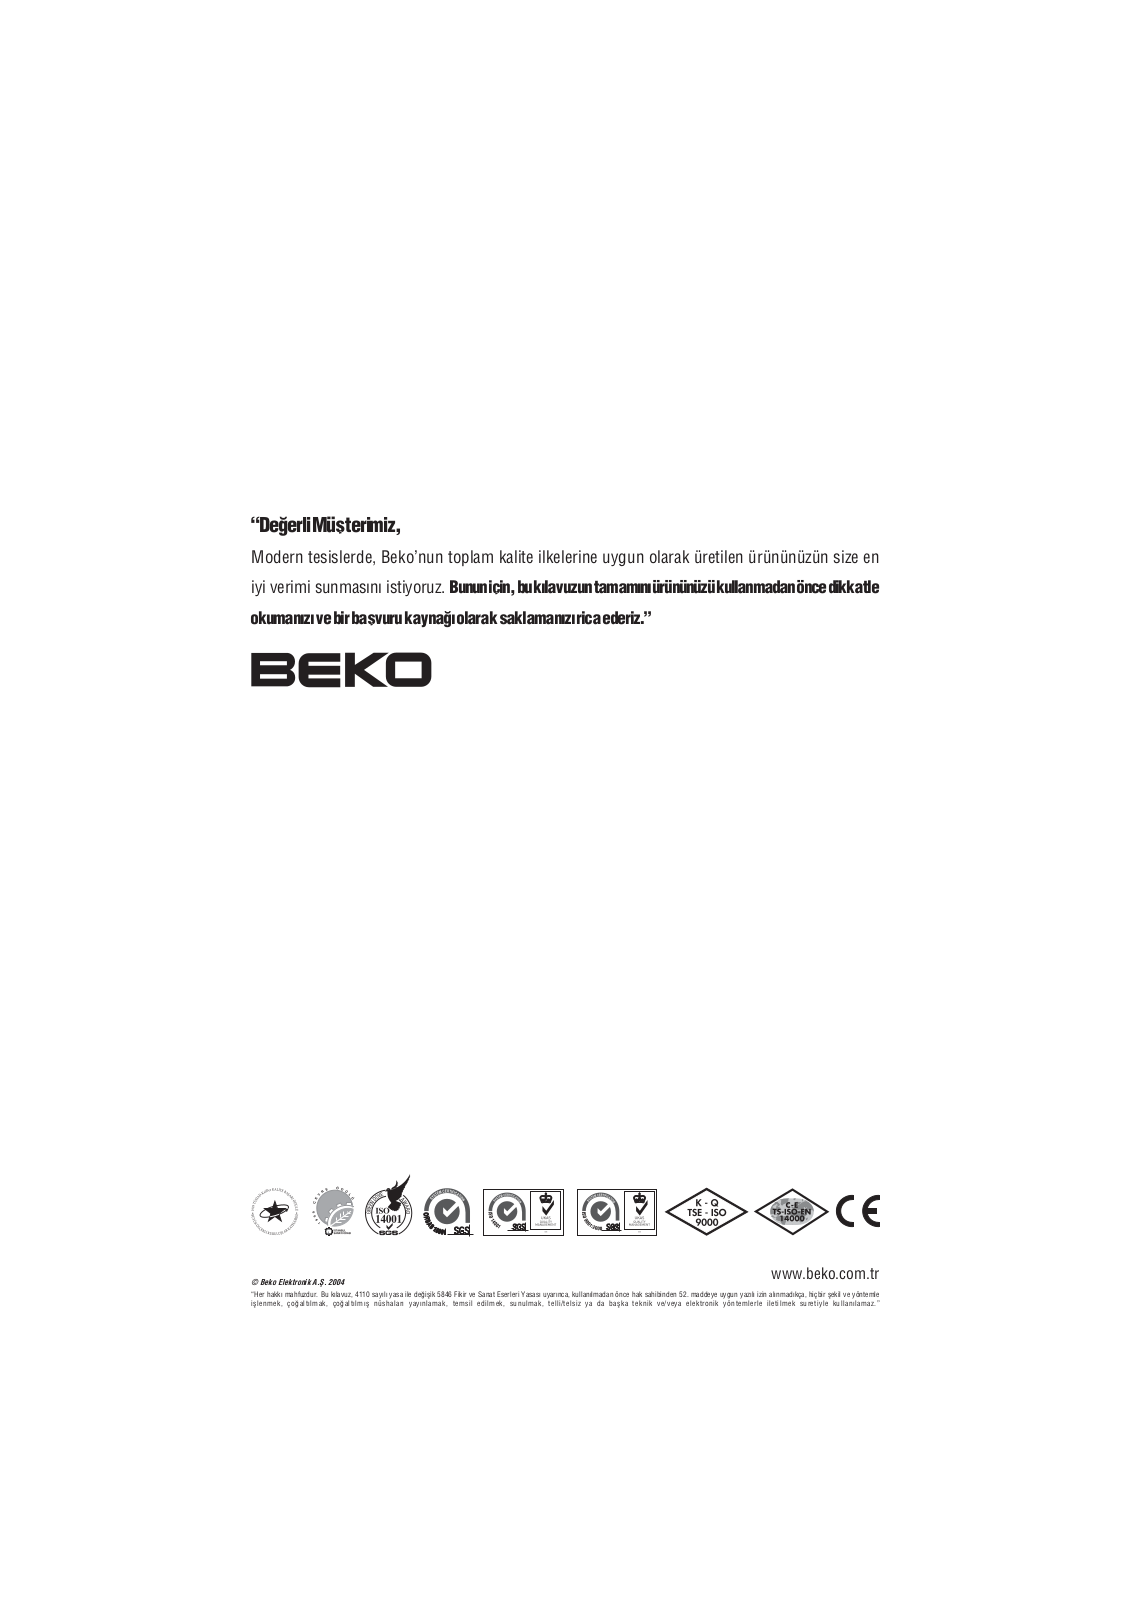 Beko 101 ATR Manual